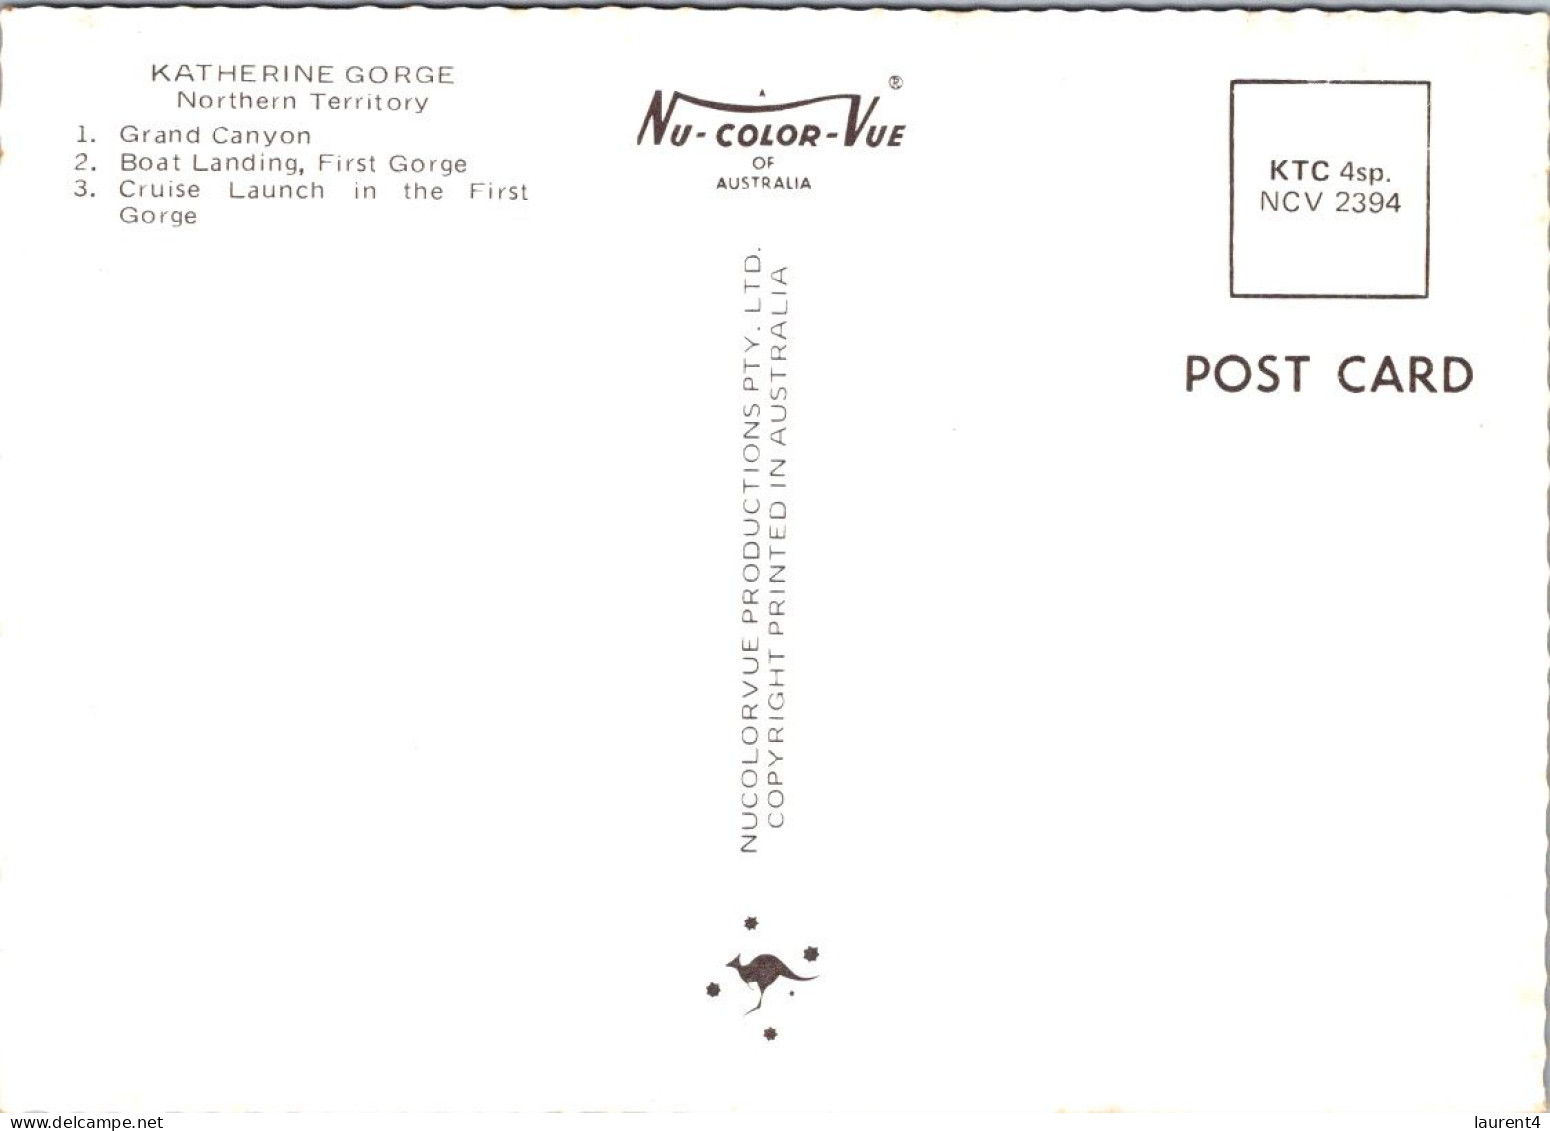 20-2-2024 (4 X 41) Australia - NT - Katherine Gorge (3 Postcards) - Darwin